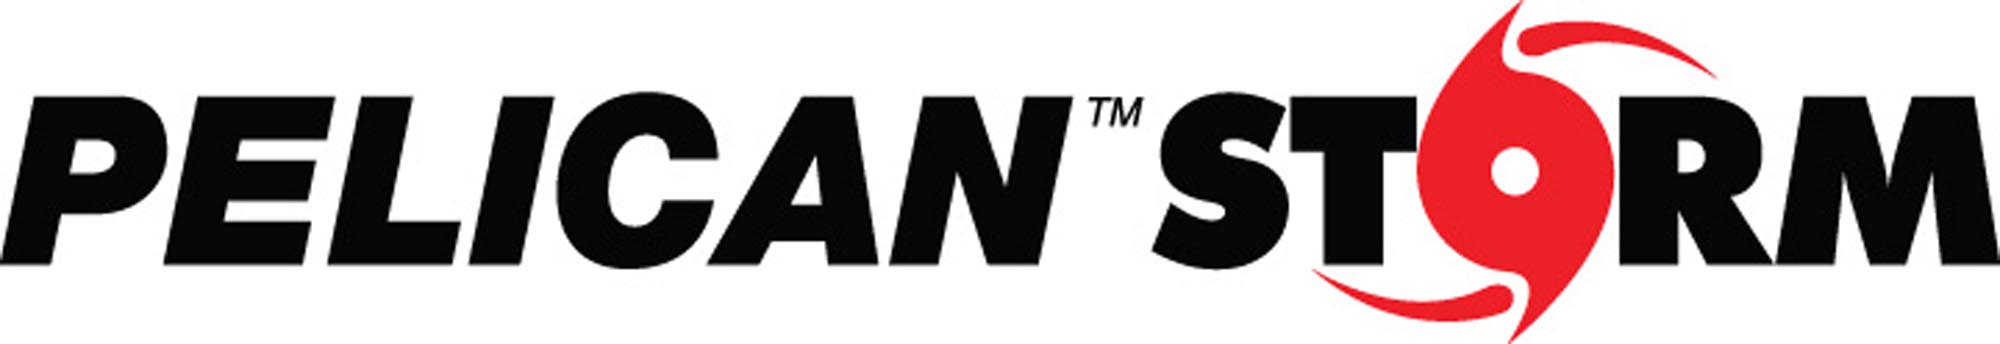 Pelican Store logo